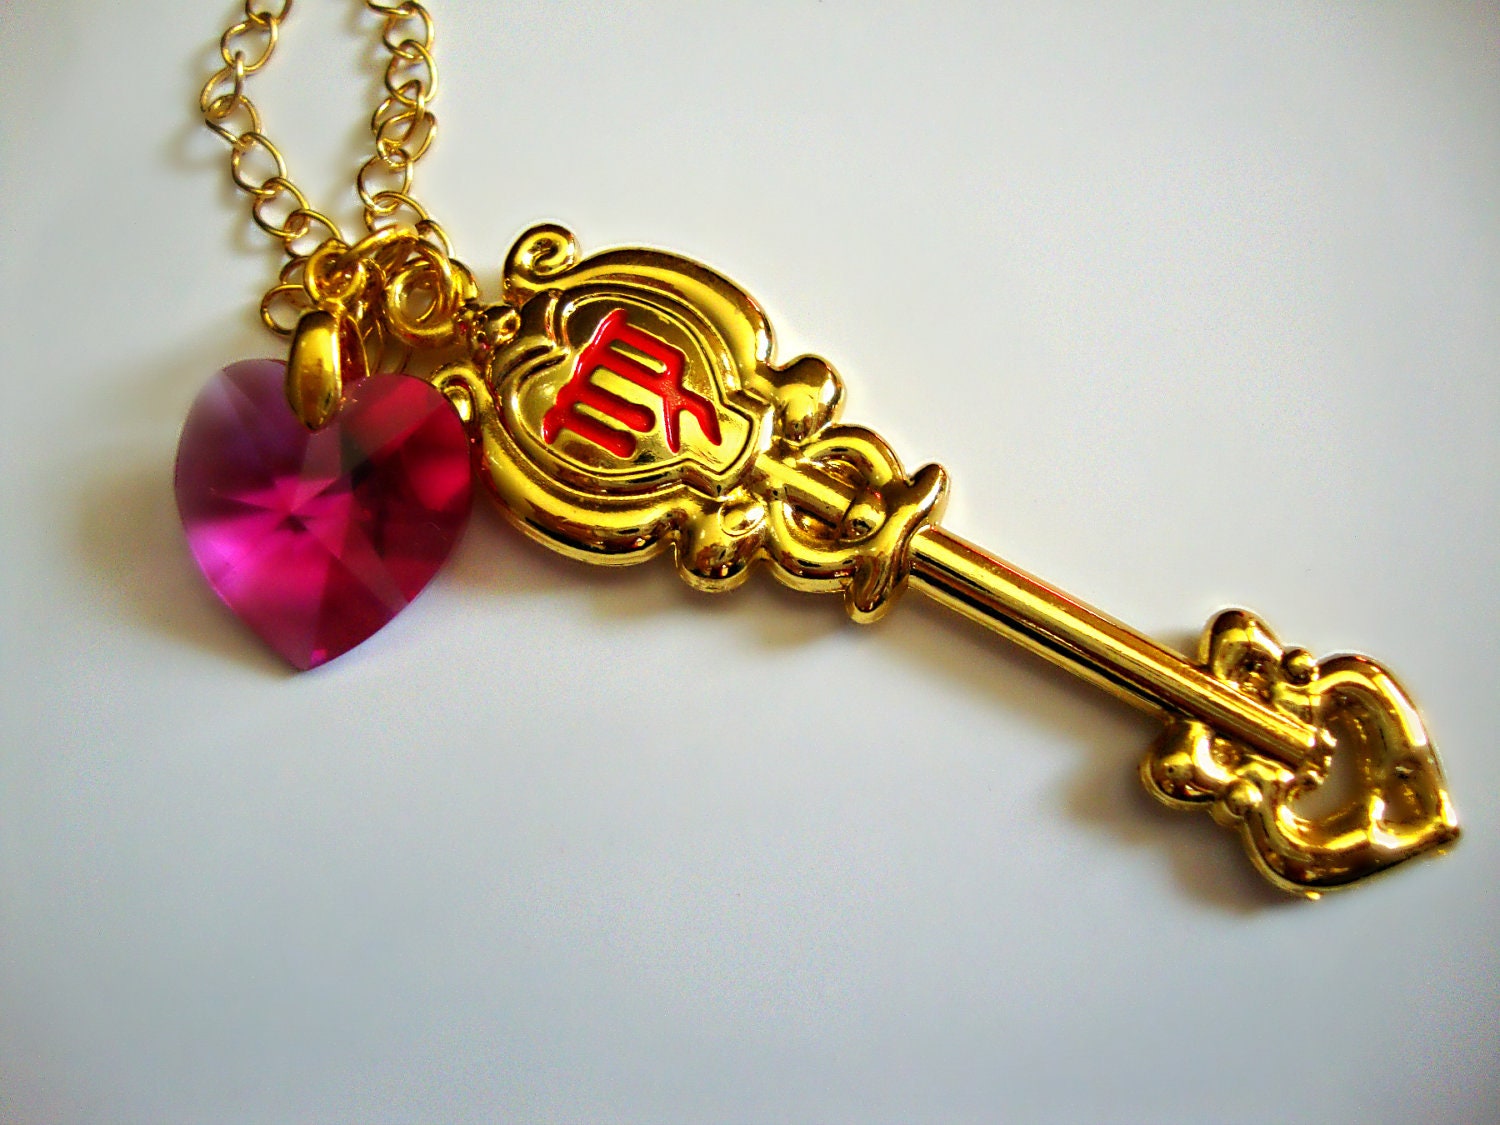 The Celestial Key to Virgo Necklace